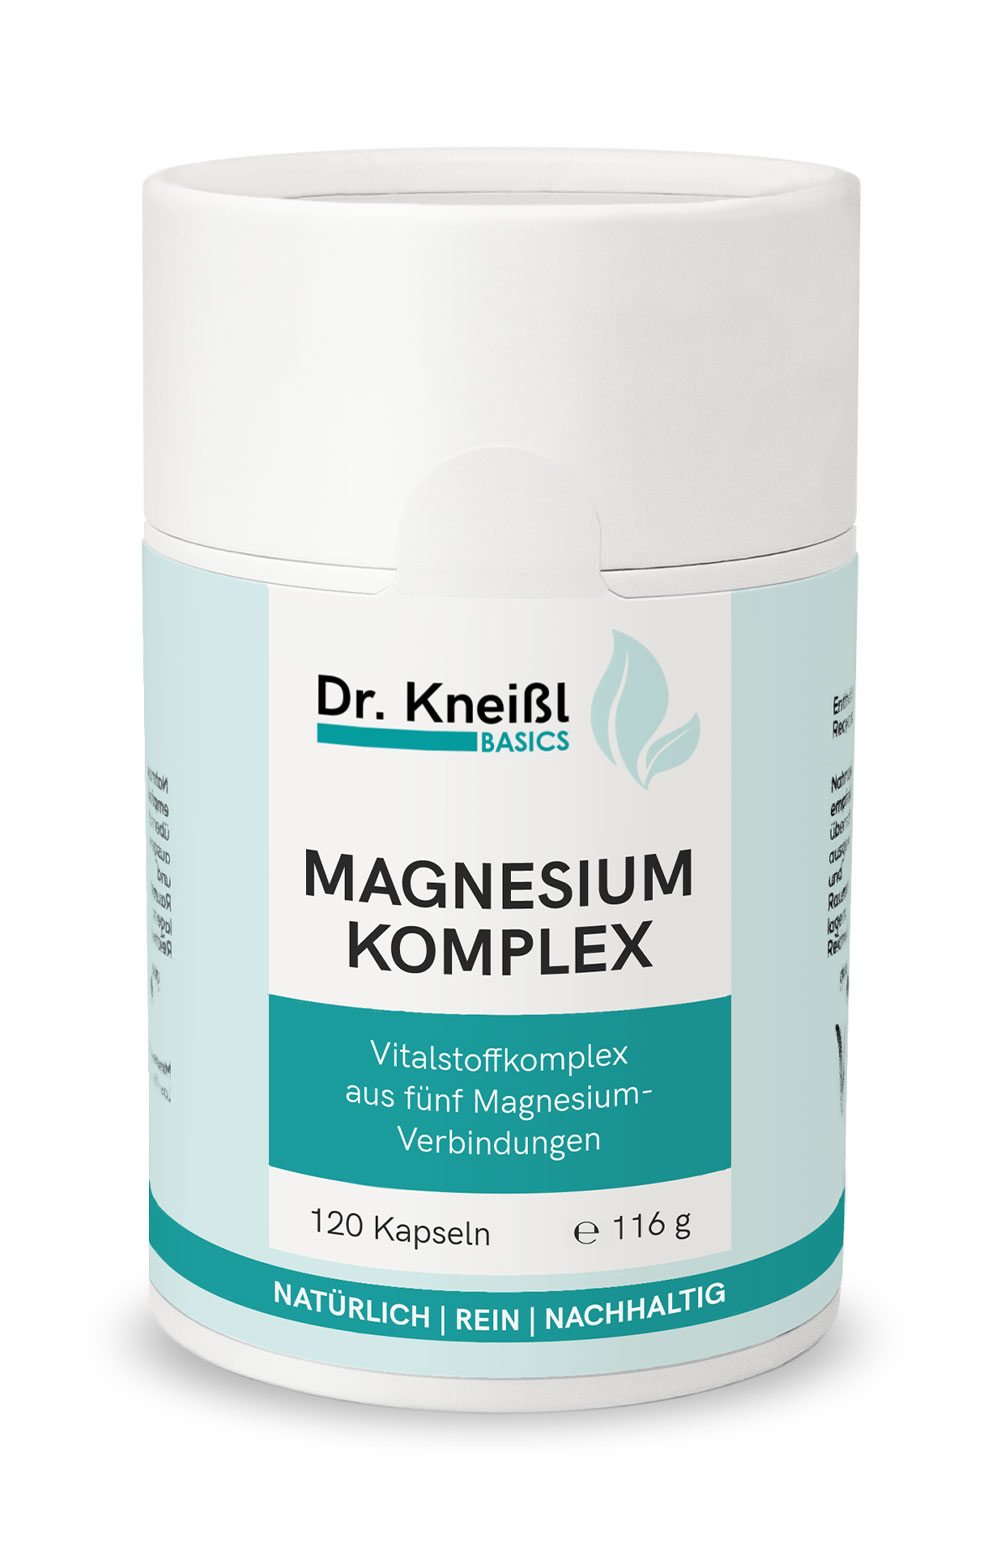 Dr. Kneißl BASICS: Magnesium Komplex